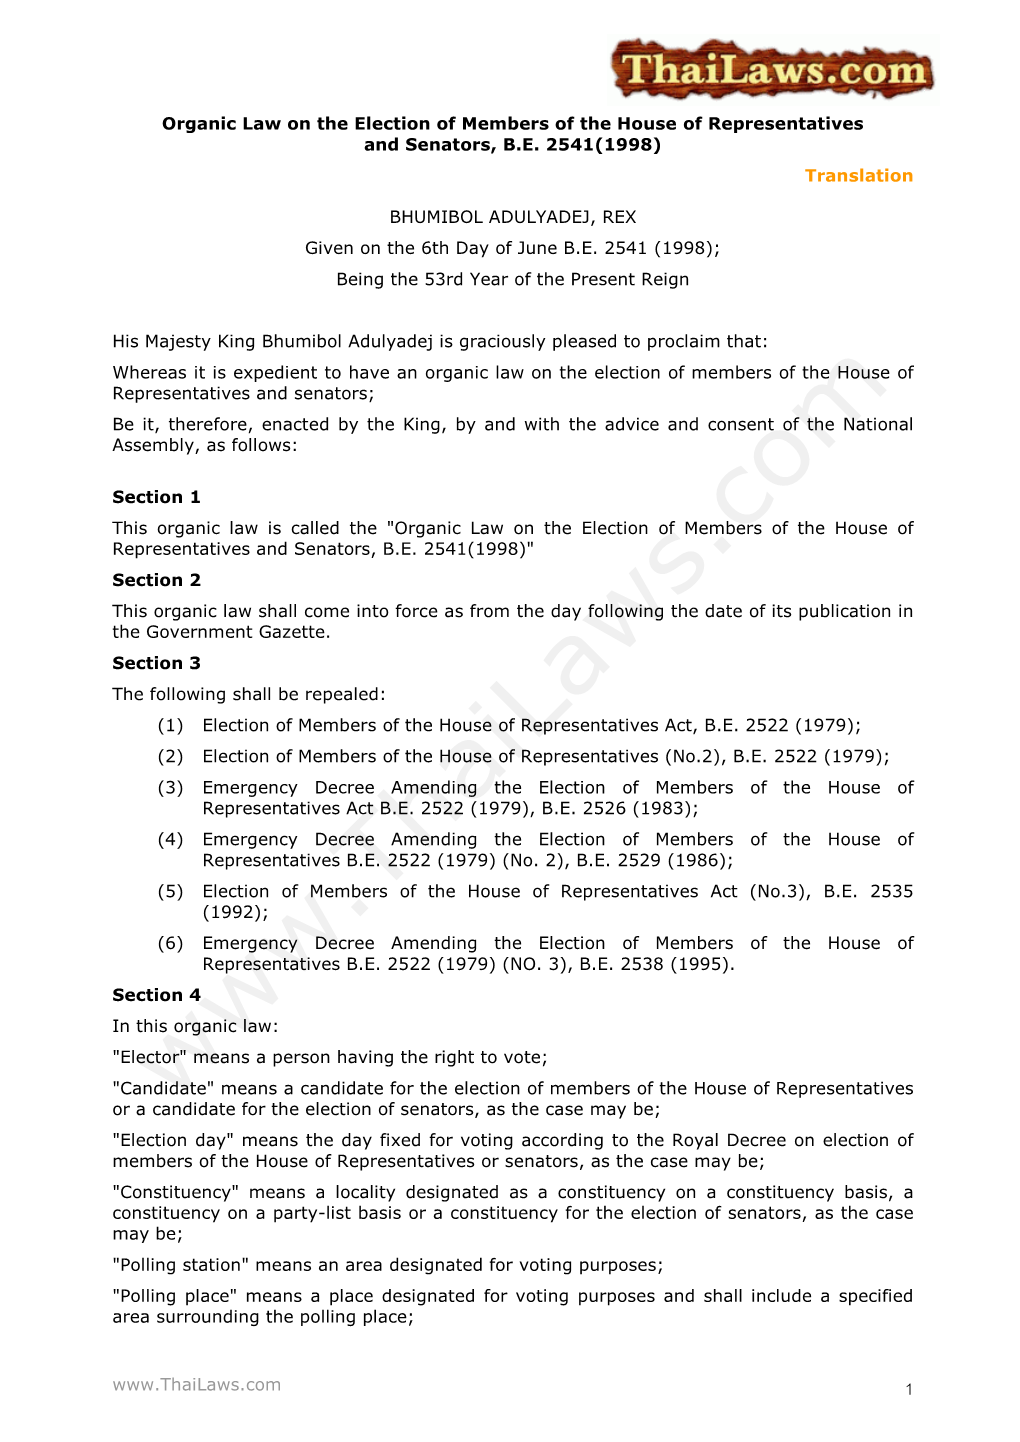 Organic Law on the Election of Members of the House of Representatives and Senators, B.E. 2541(1998) Translatio